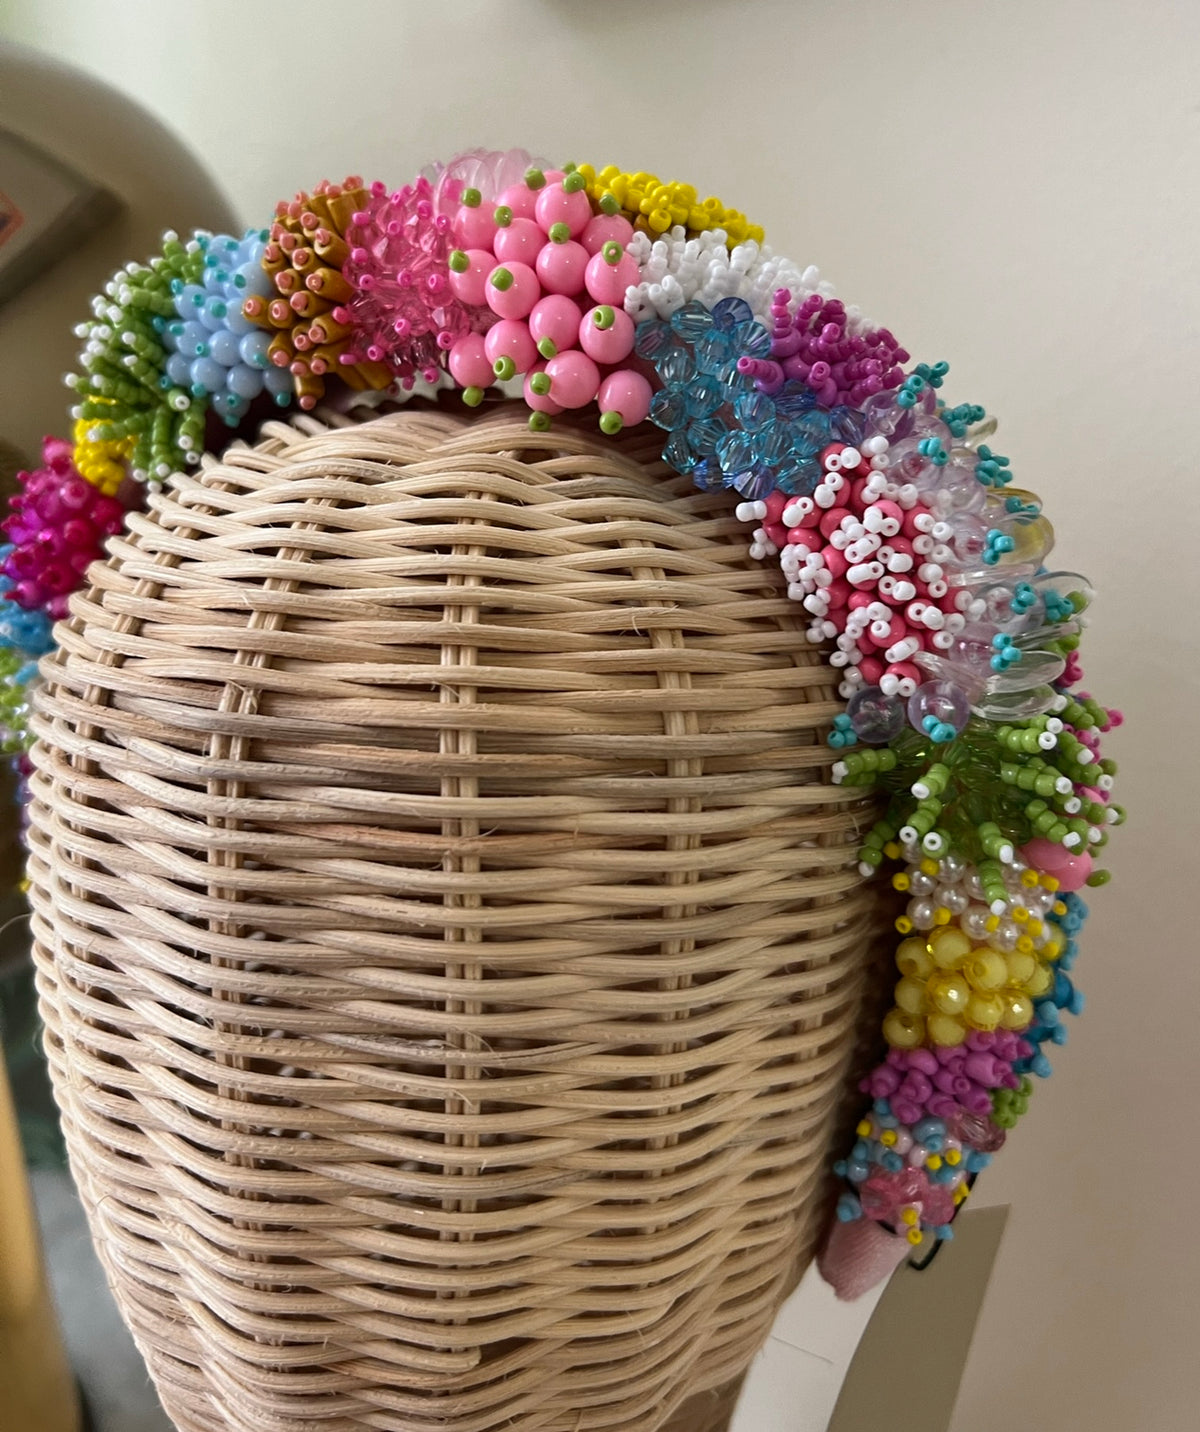 Bimba-Ariel Coral Headband (Enter code “bimba15” to get 15% off)